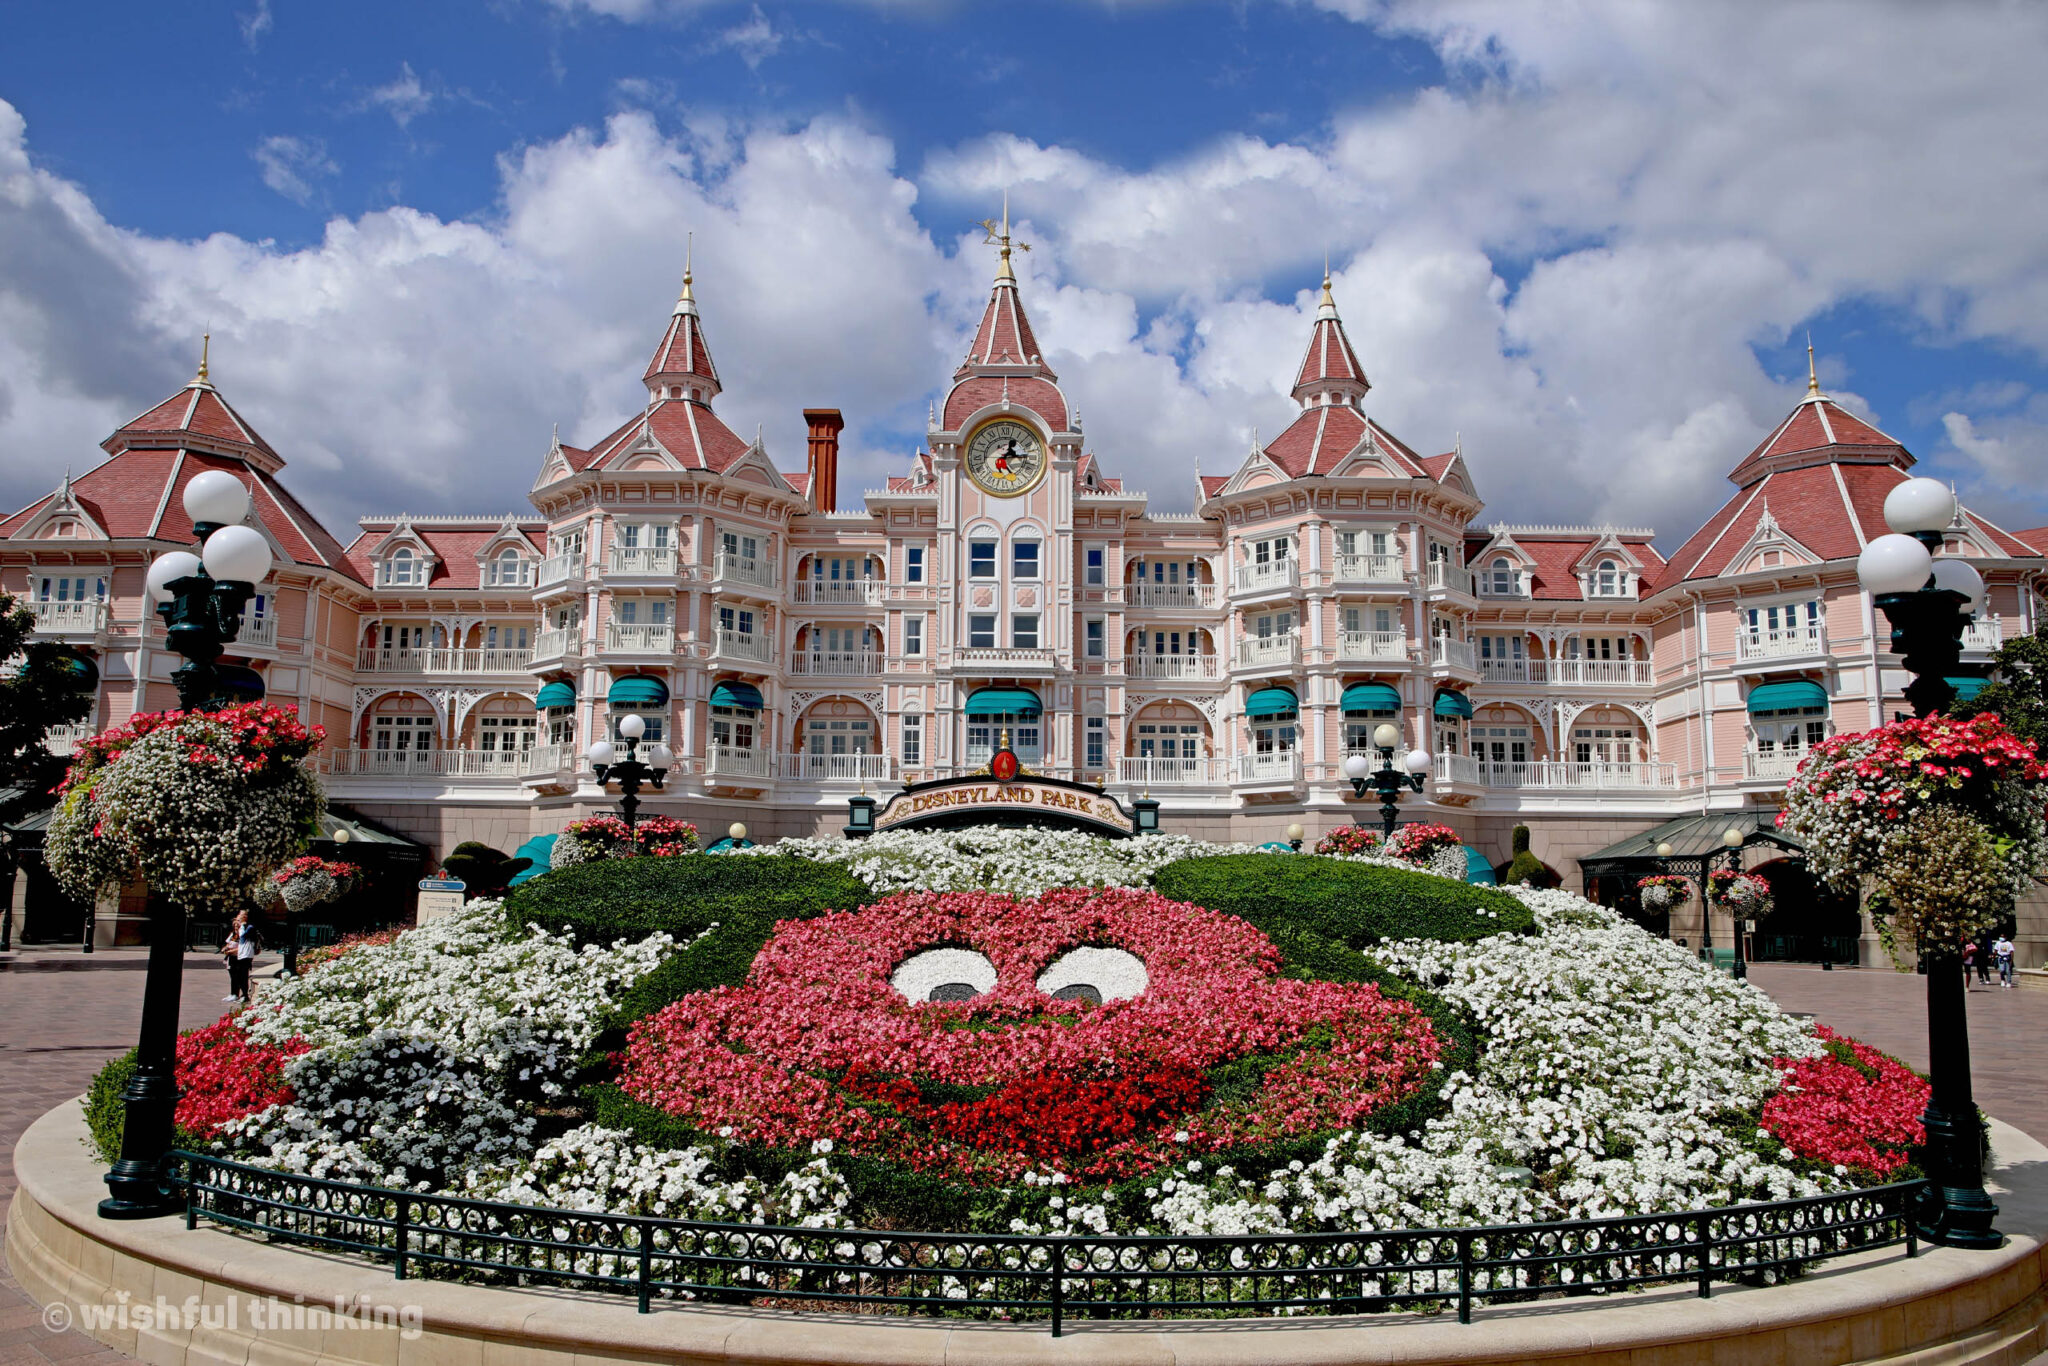 The stunning Disneyland Paris hotel facade welcomes guests to enter Parc Disneyland at Marne-la-Valée, France.